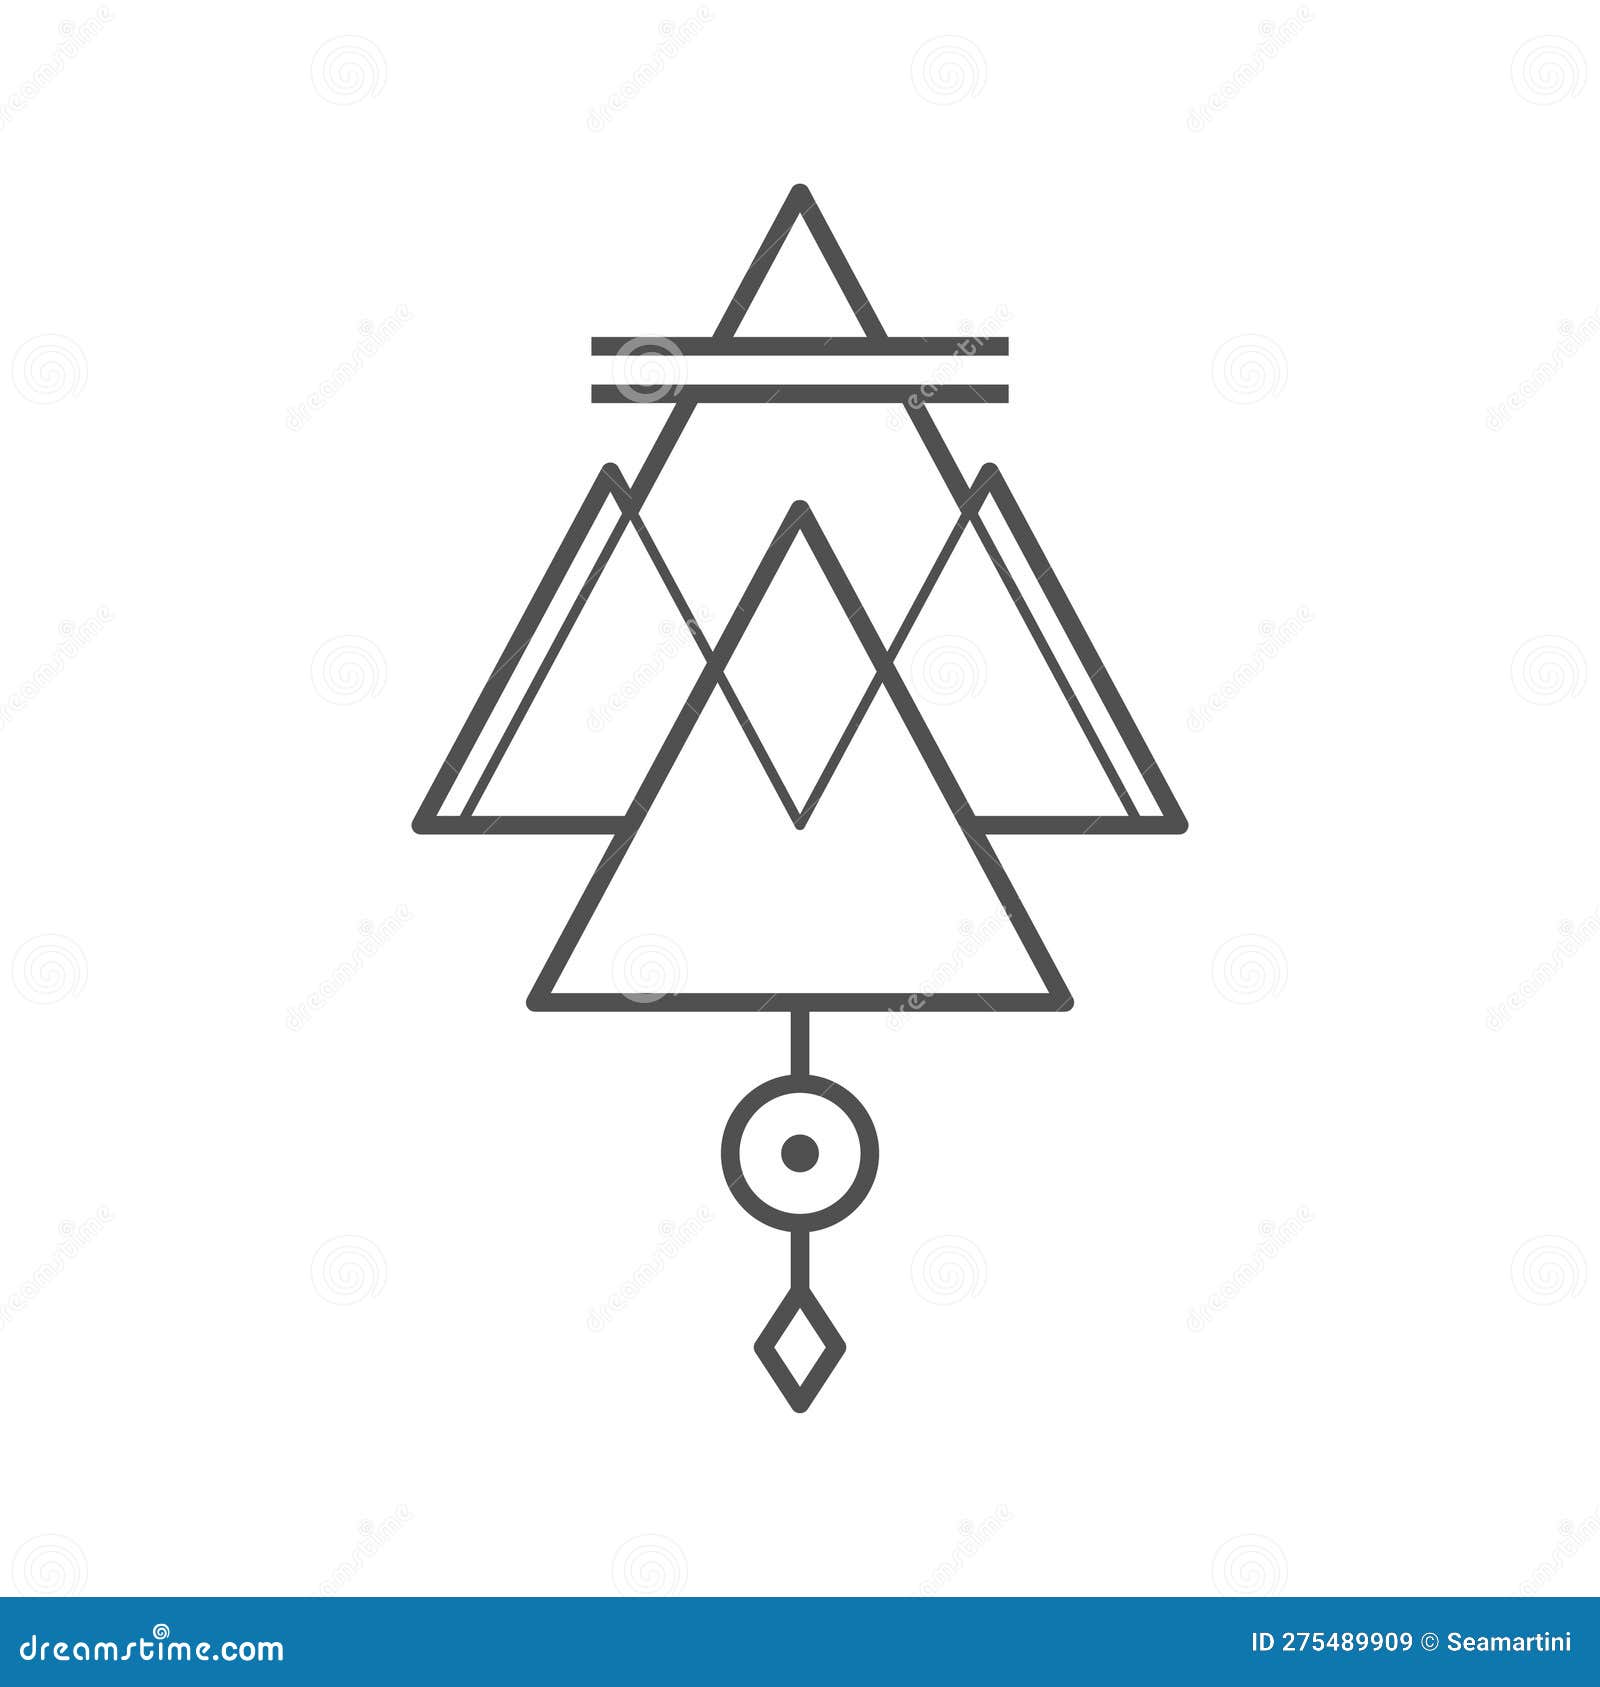 All Seeing Eye Triangle Geometric Vector Design Providance Pyramid Tattoo  Symbol With Occult Secret Hand Sign Mystic Spiritual Illuminati Emblem  Sketch Drawing Illustration Stock Illustration - Download Image Now - iStock